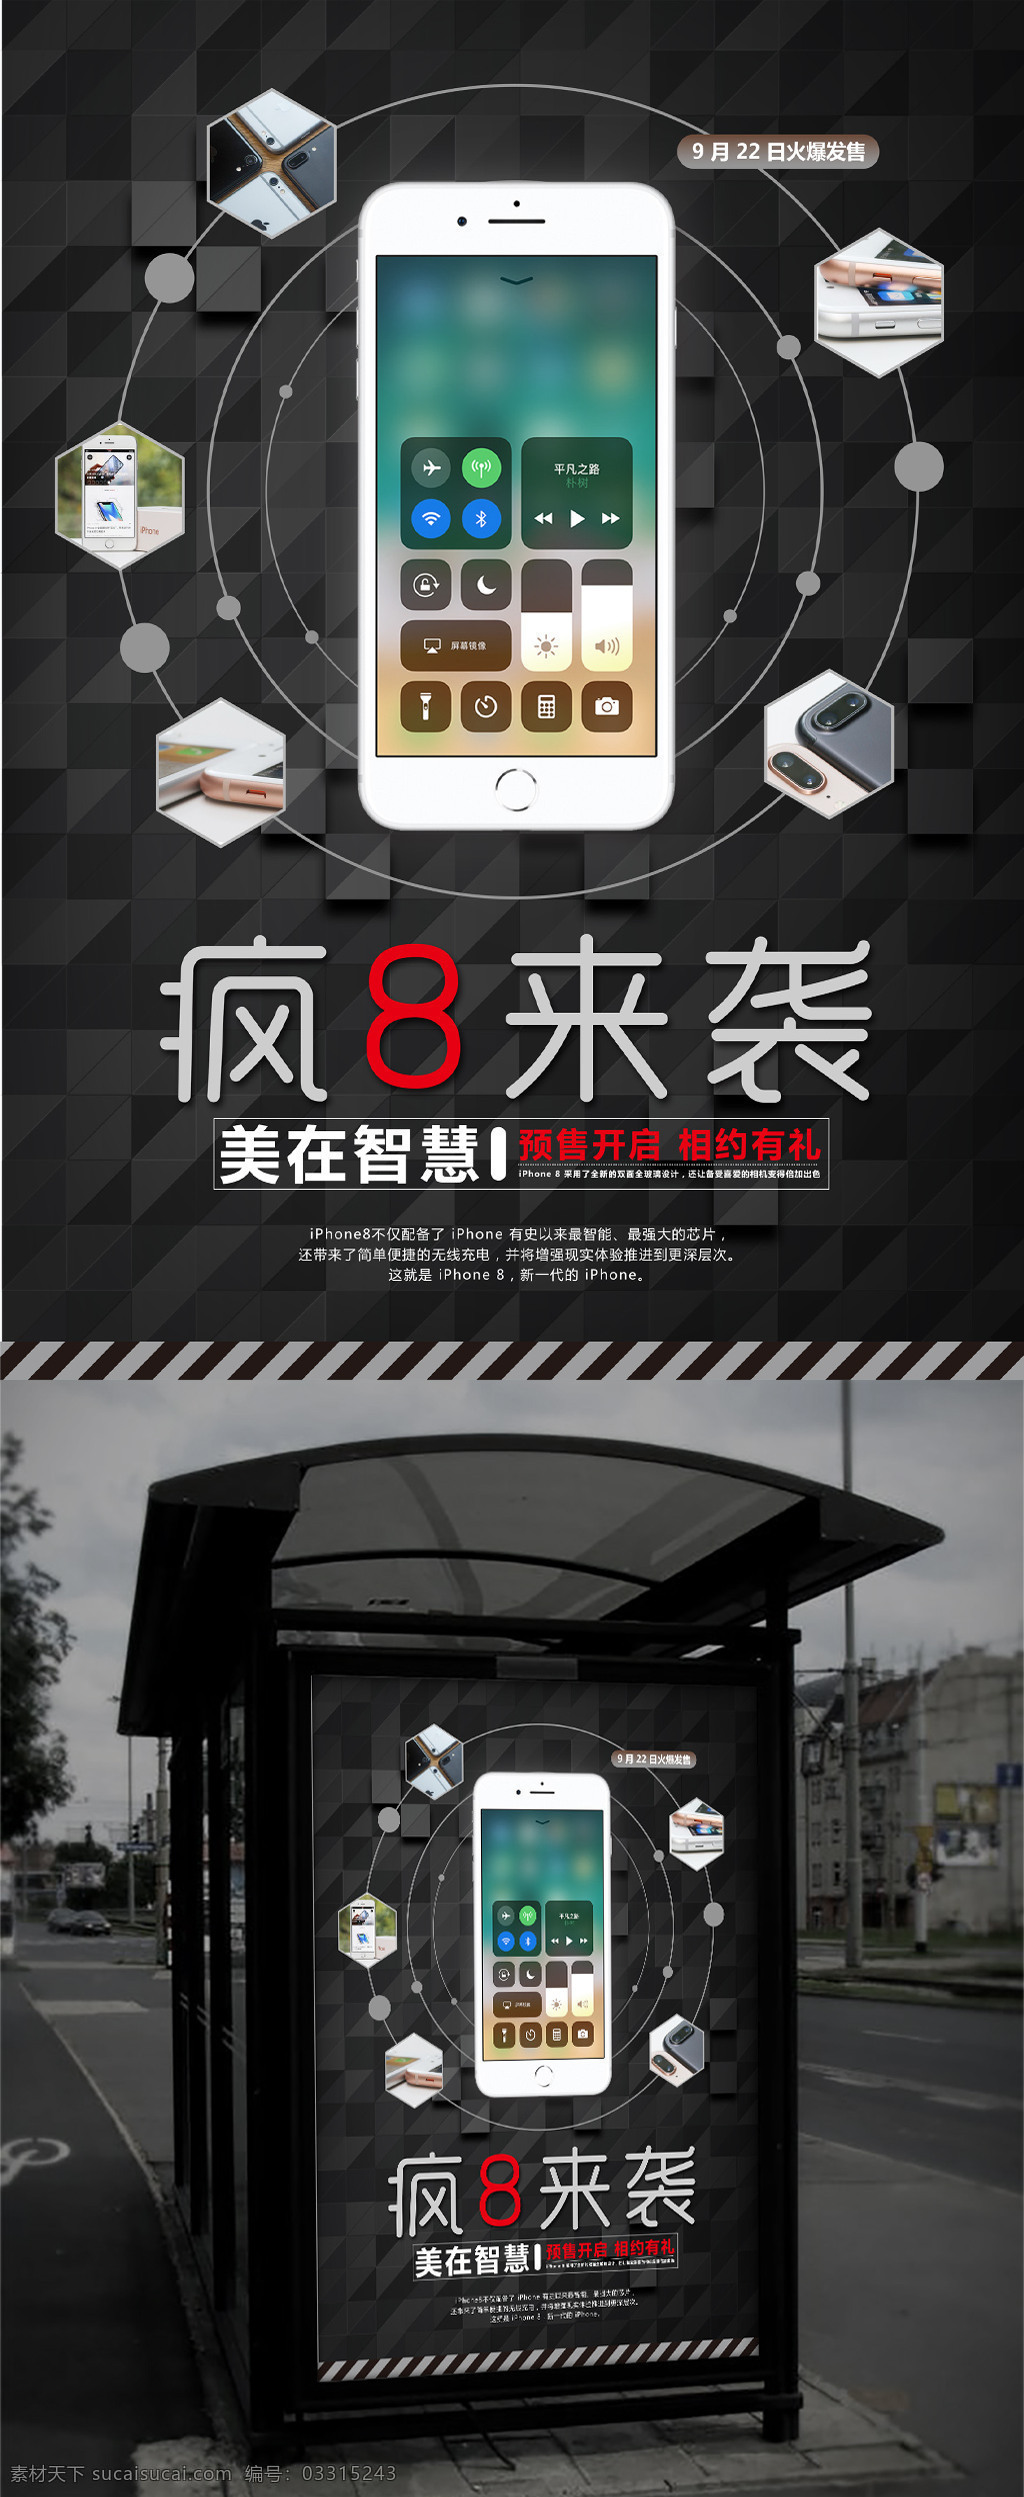 iphone8 手机 促销 海报 苹果 样机 iphonex 苹果x手机 苹果8海报 宣传海报 苹果宣传海报